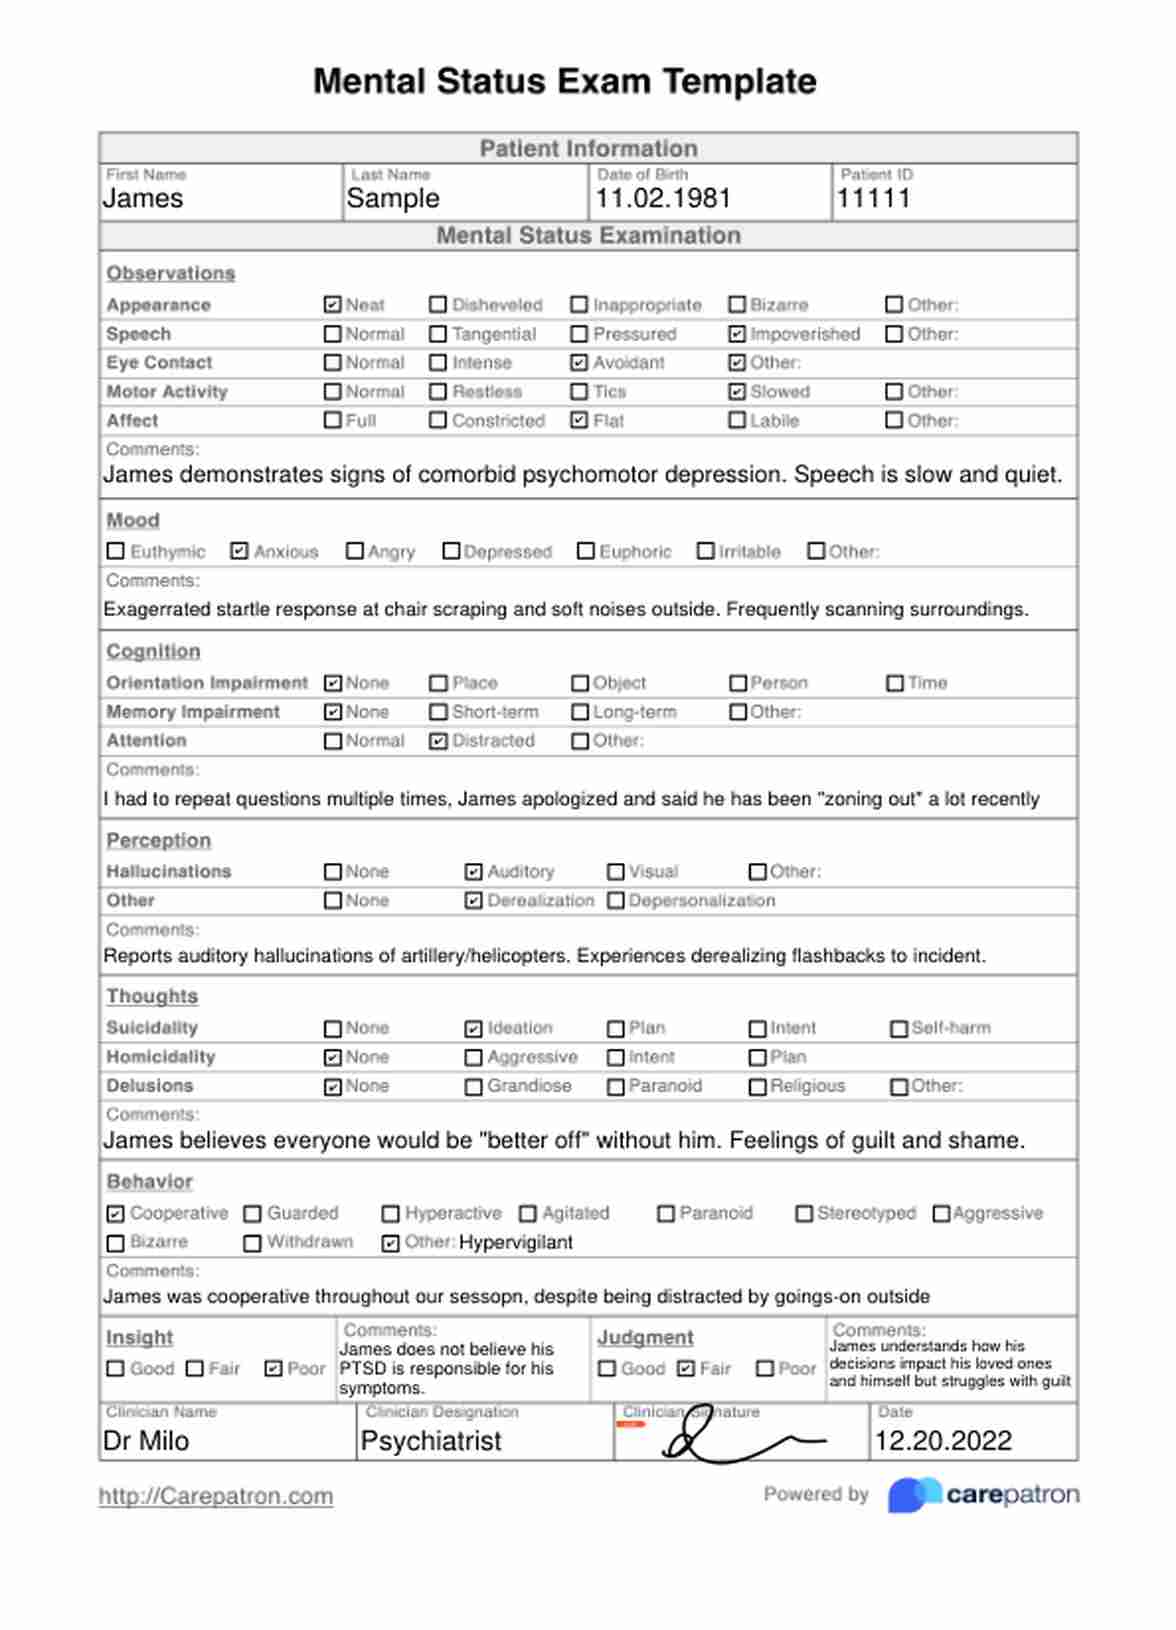 Mental Status Exam Template PDF Example